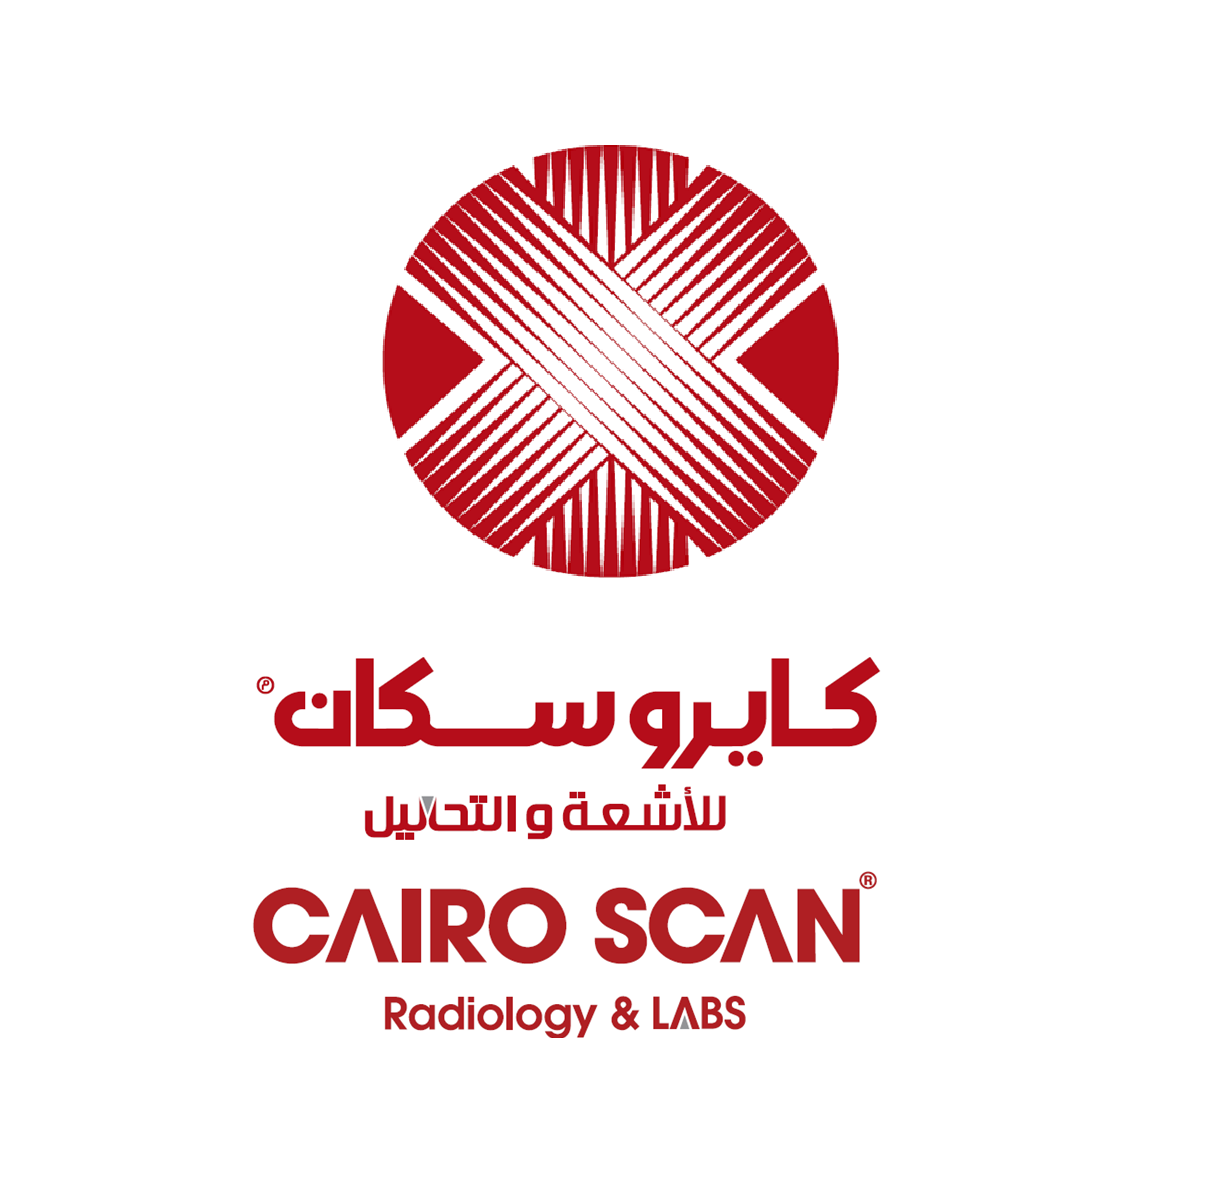 Cairo Scan